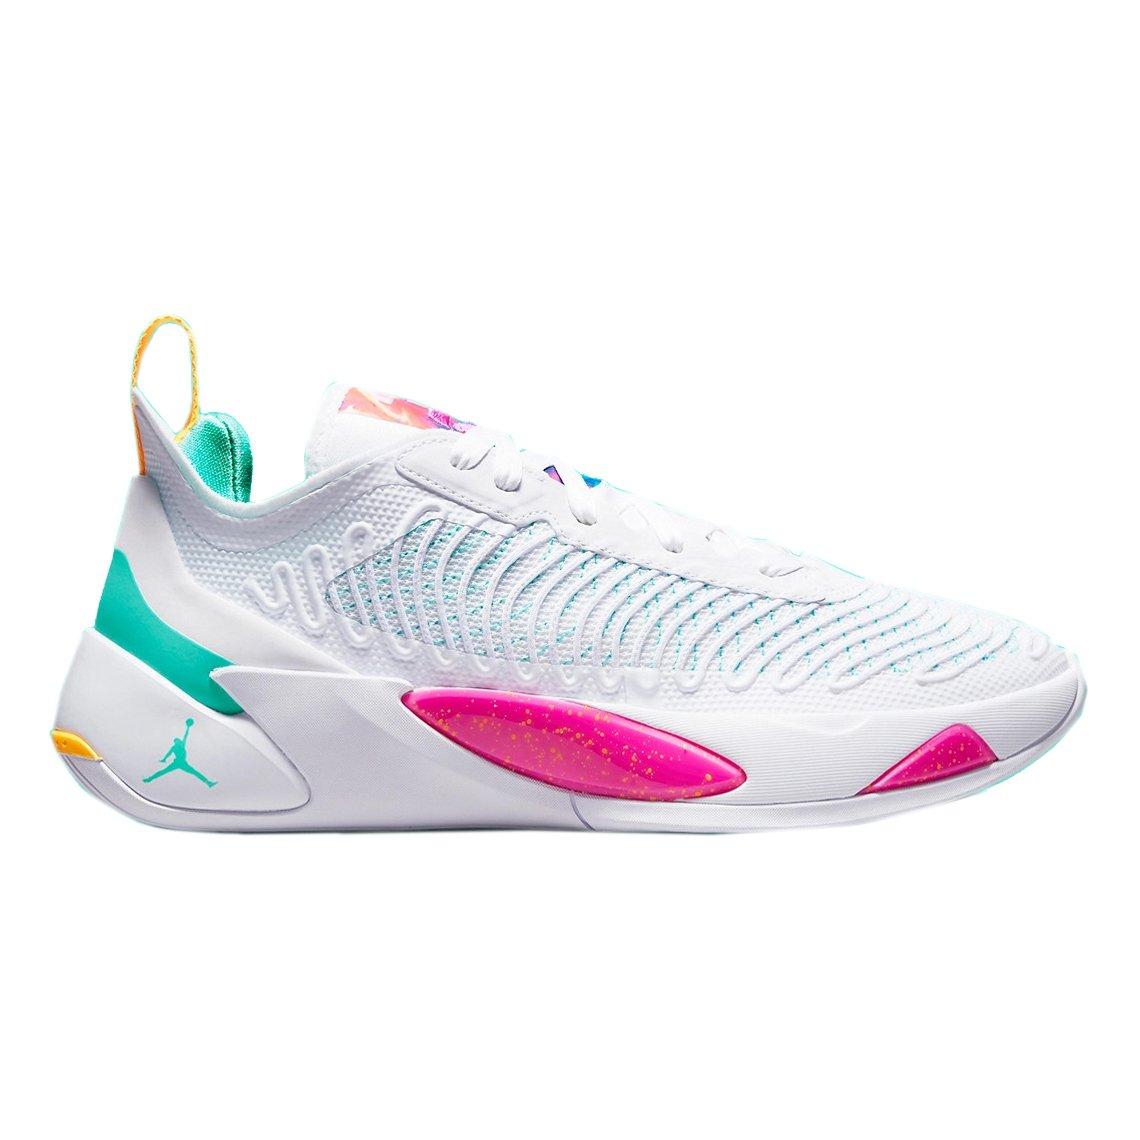 Jordan Luka 1 Fire Pink/Dynamic Turquoise Men's Basketball Shoe